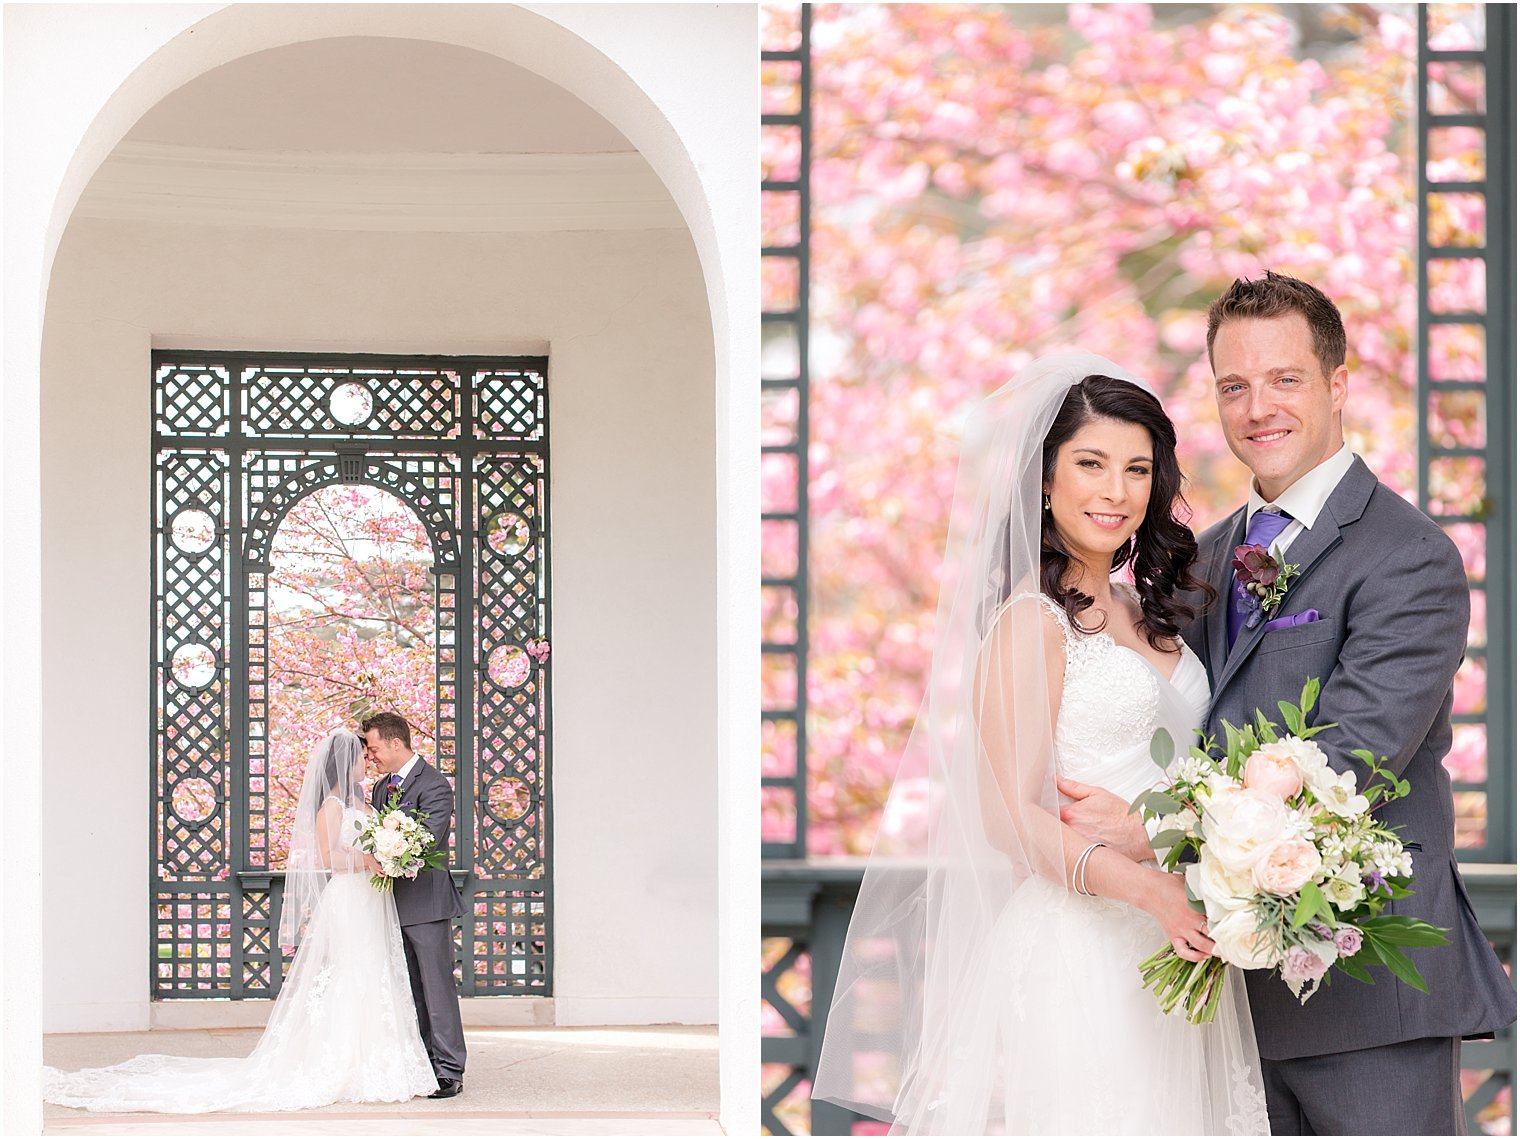 Cherry blossom wedding photos | Photos by Idalia Photography